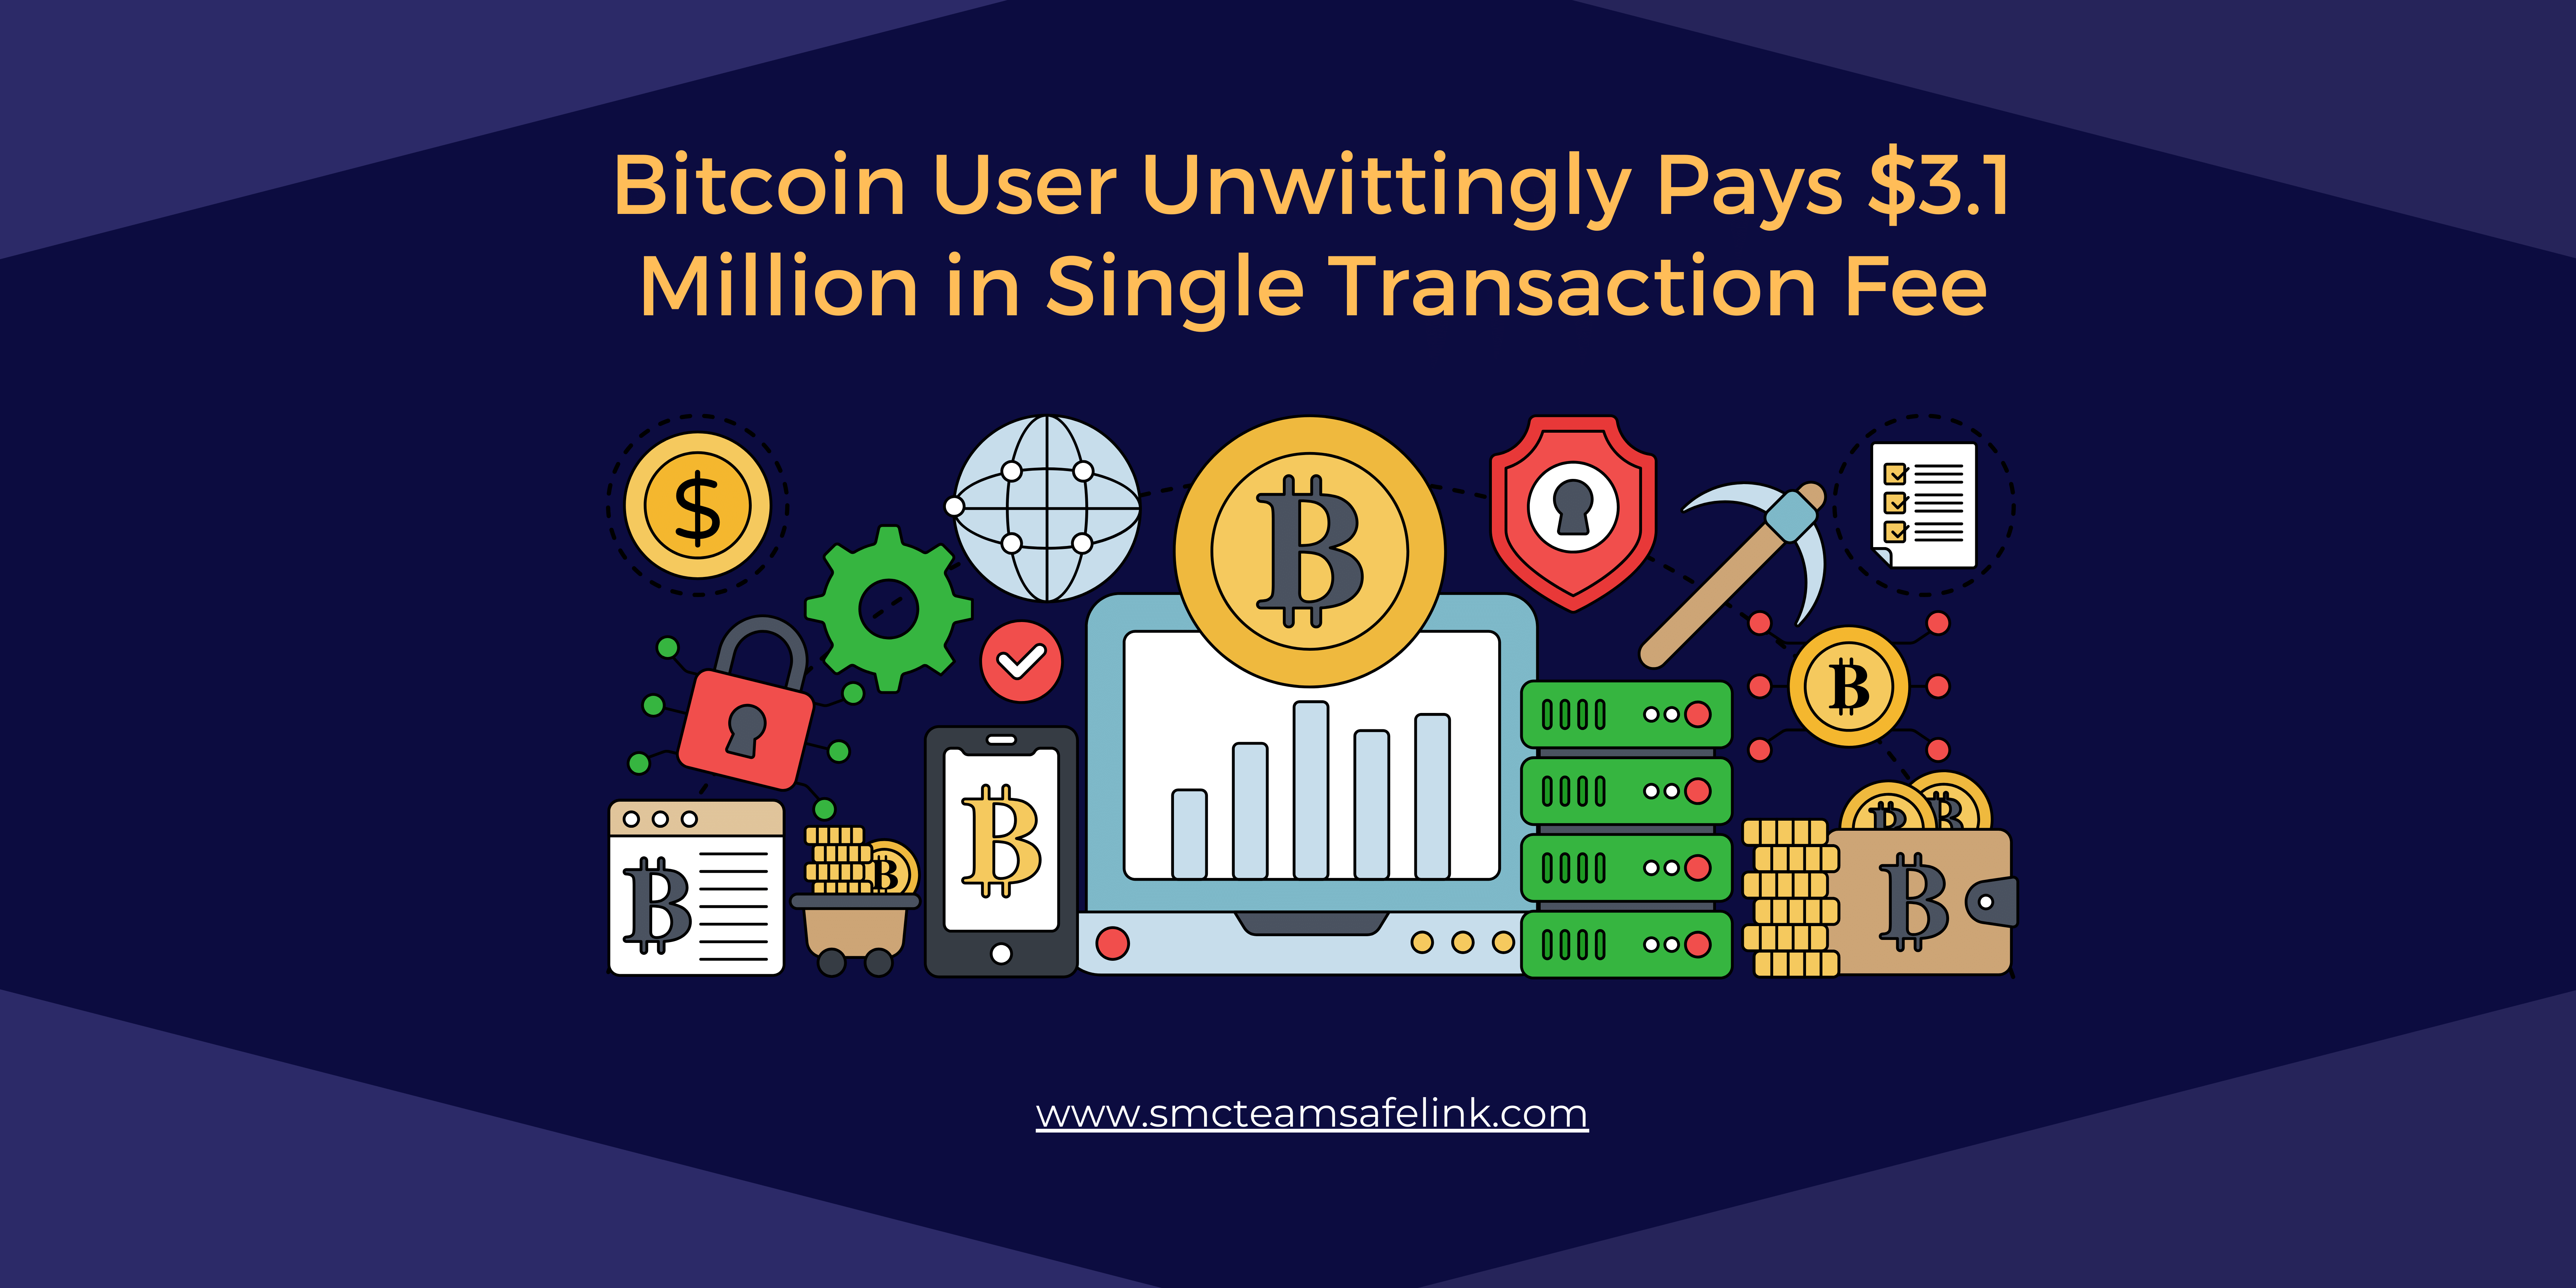 Bitcoin User Unwittingly Pays $3.1 Million in Single Transaction Fee